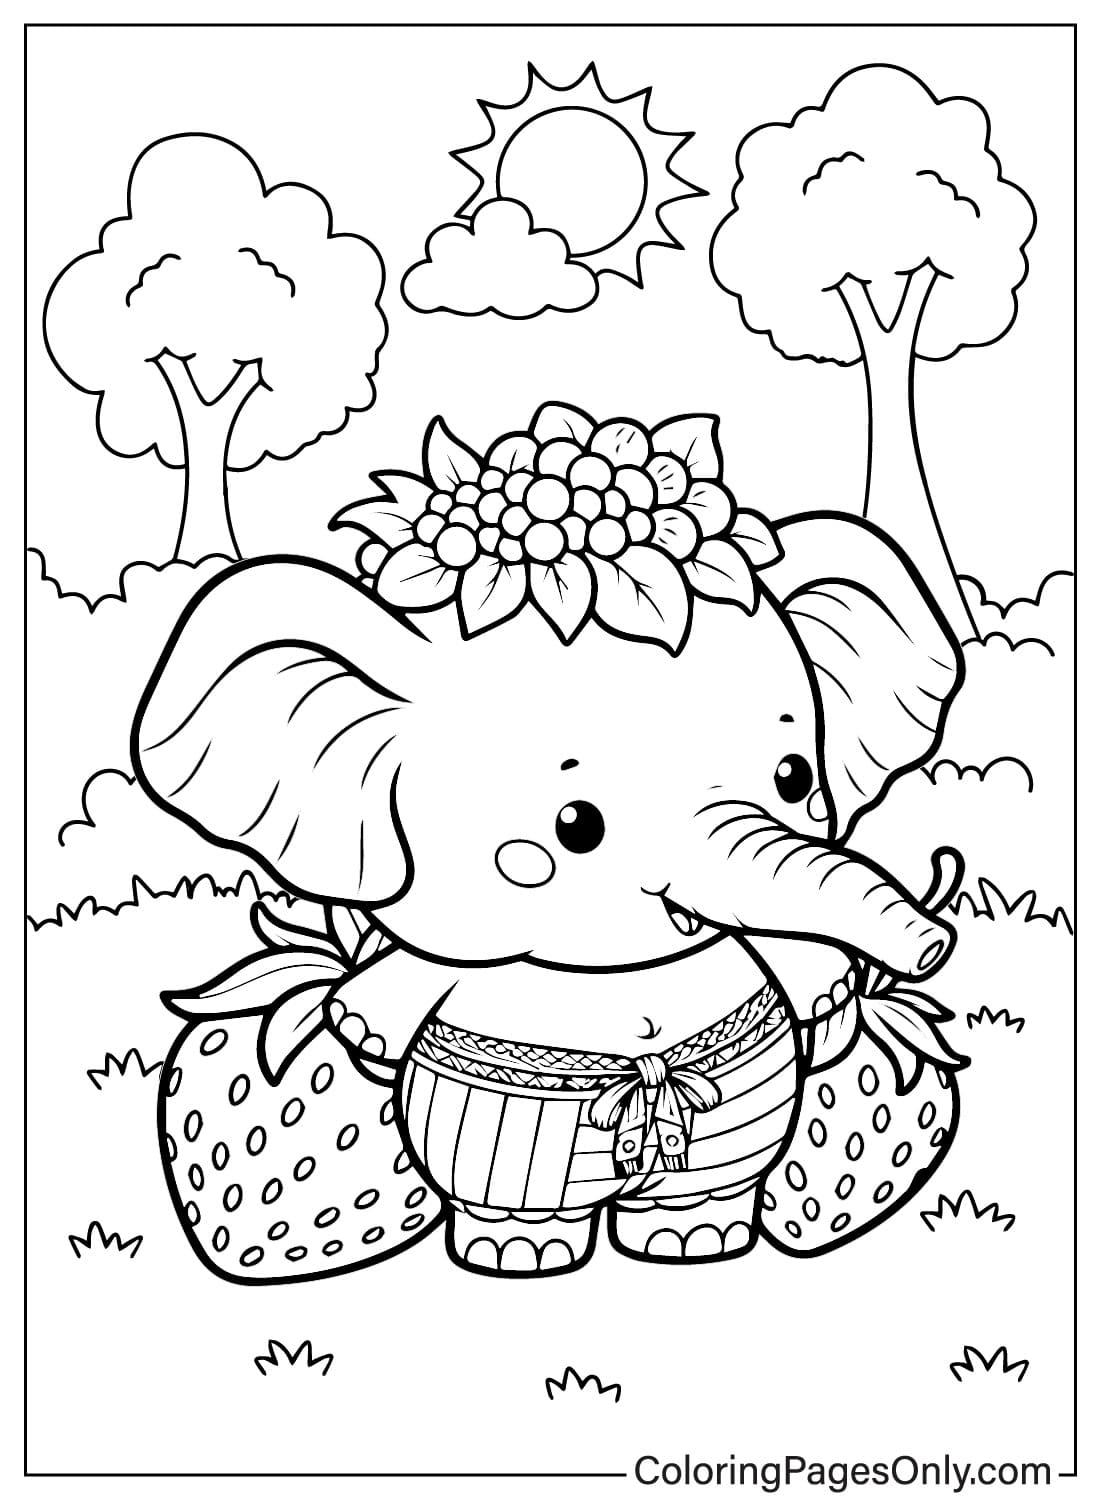 Página para colorear de Elefante de Fresa gratis de Elefante de Fresa